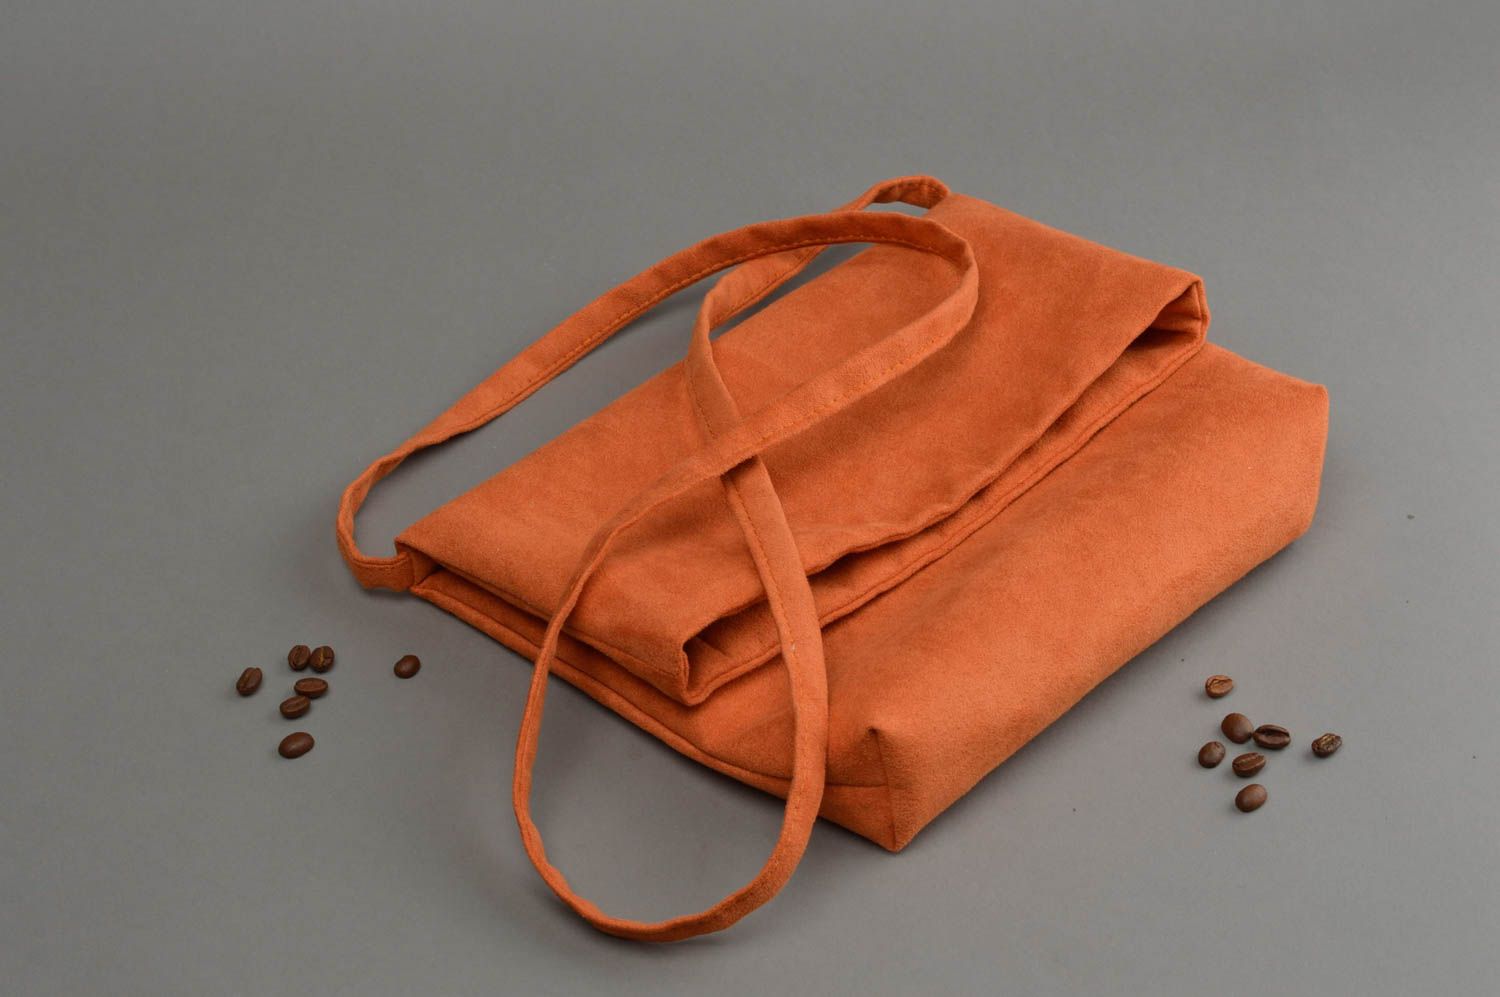 Handmade orange cloth purse designer handbag gift ideas for her women accessory photo 1